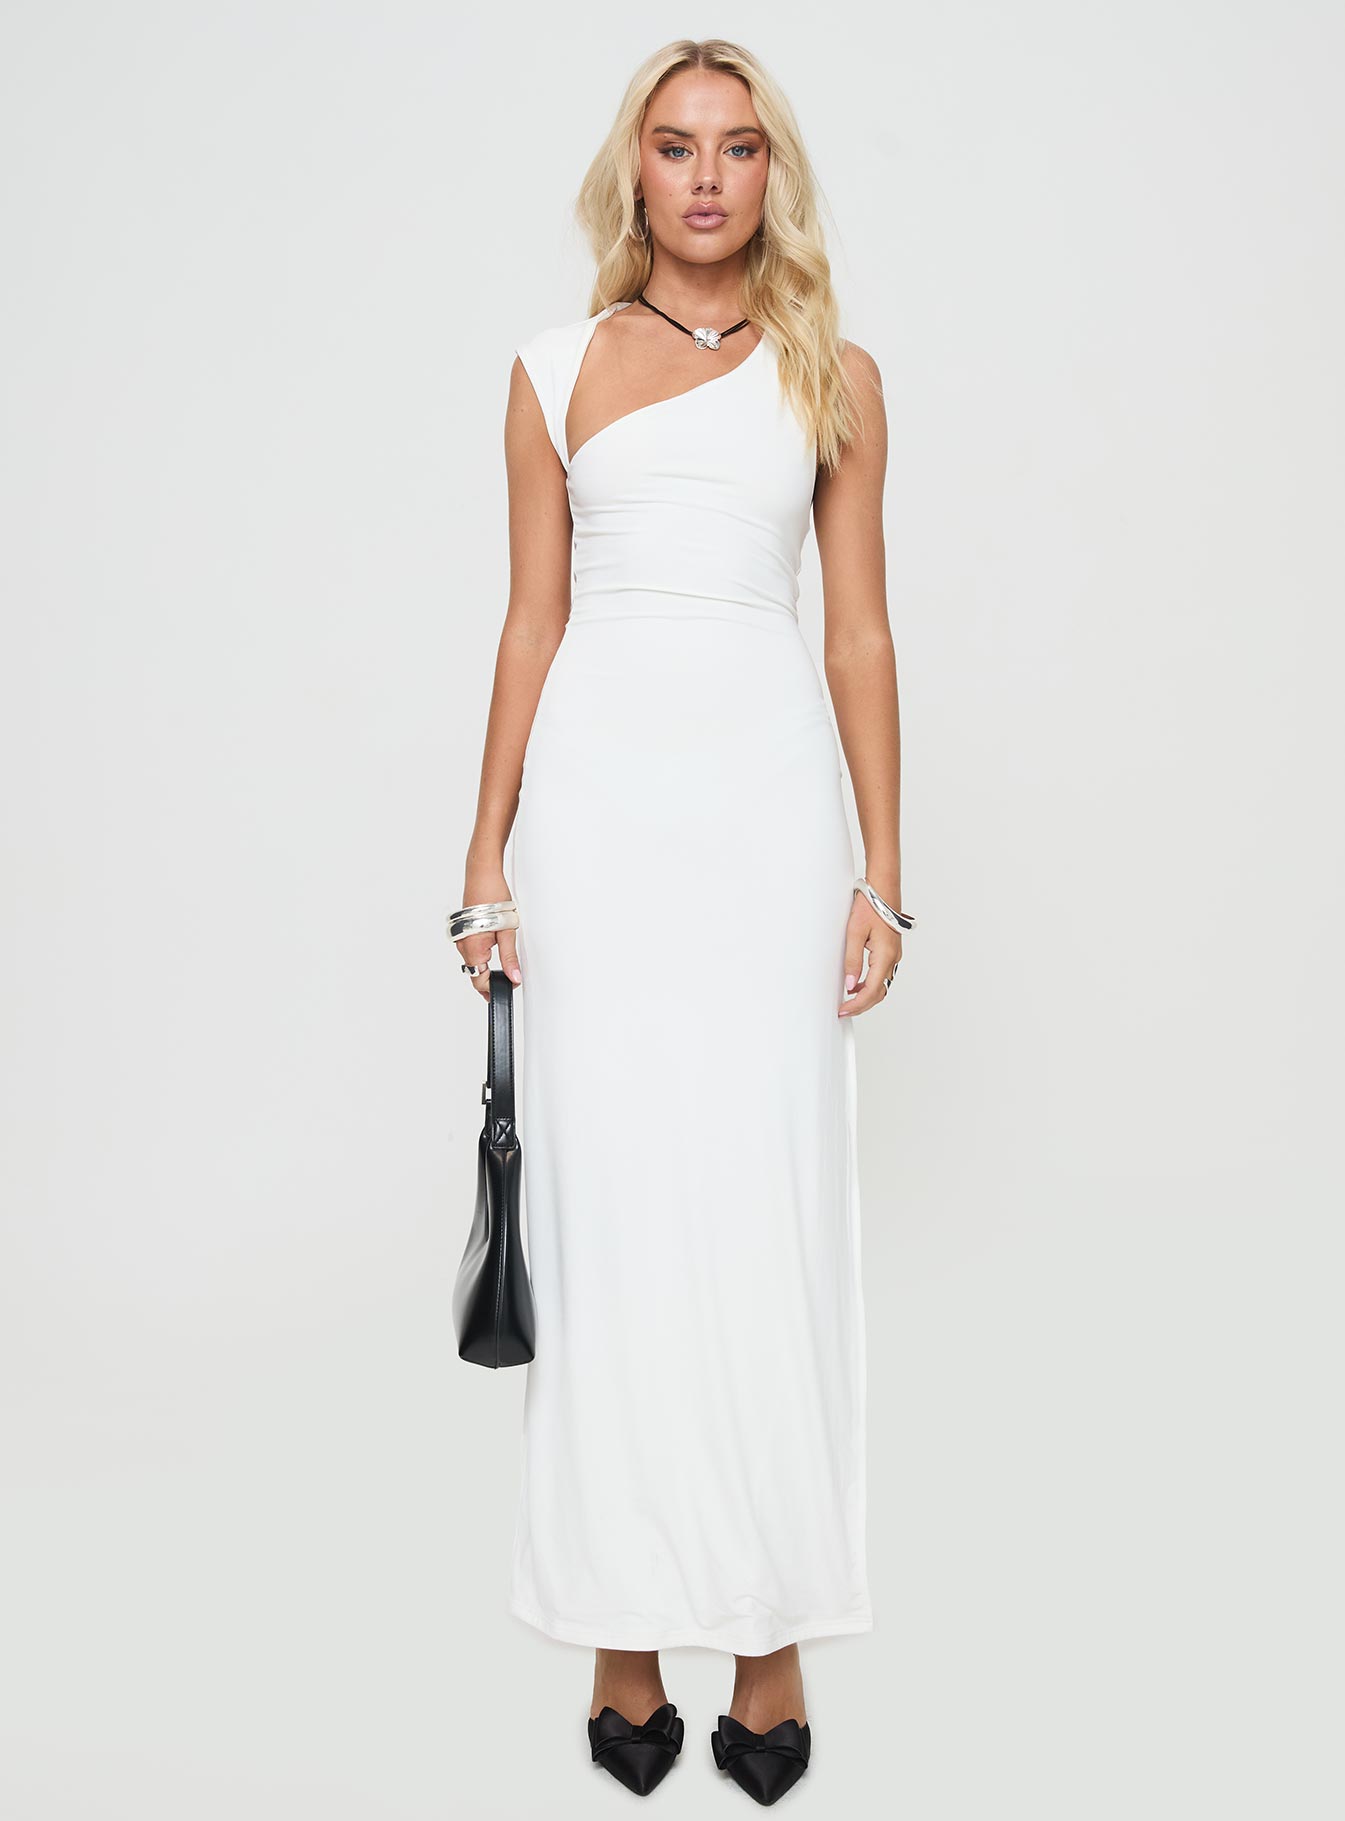 Shop Formal Dress - Pamina Maxi Dress White third image